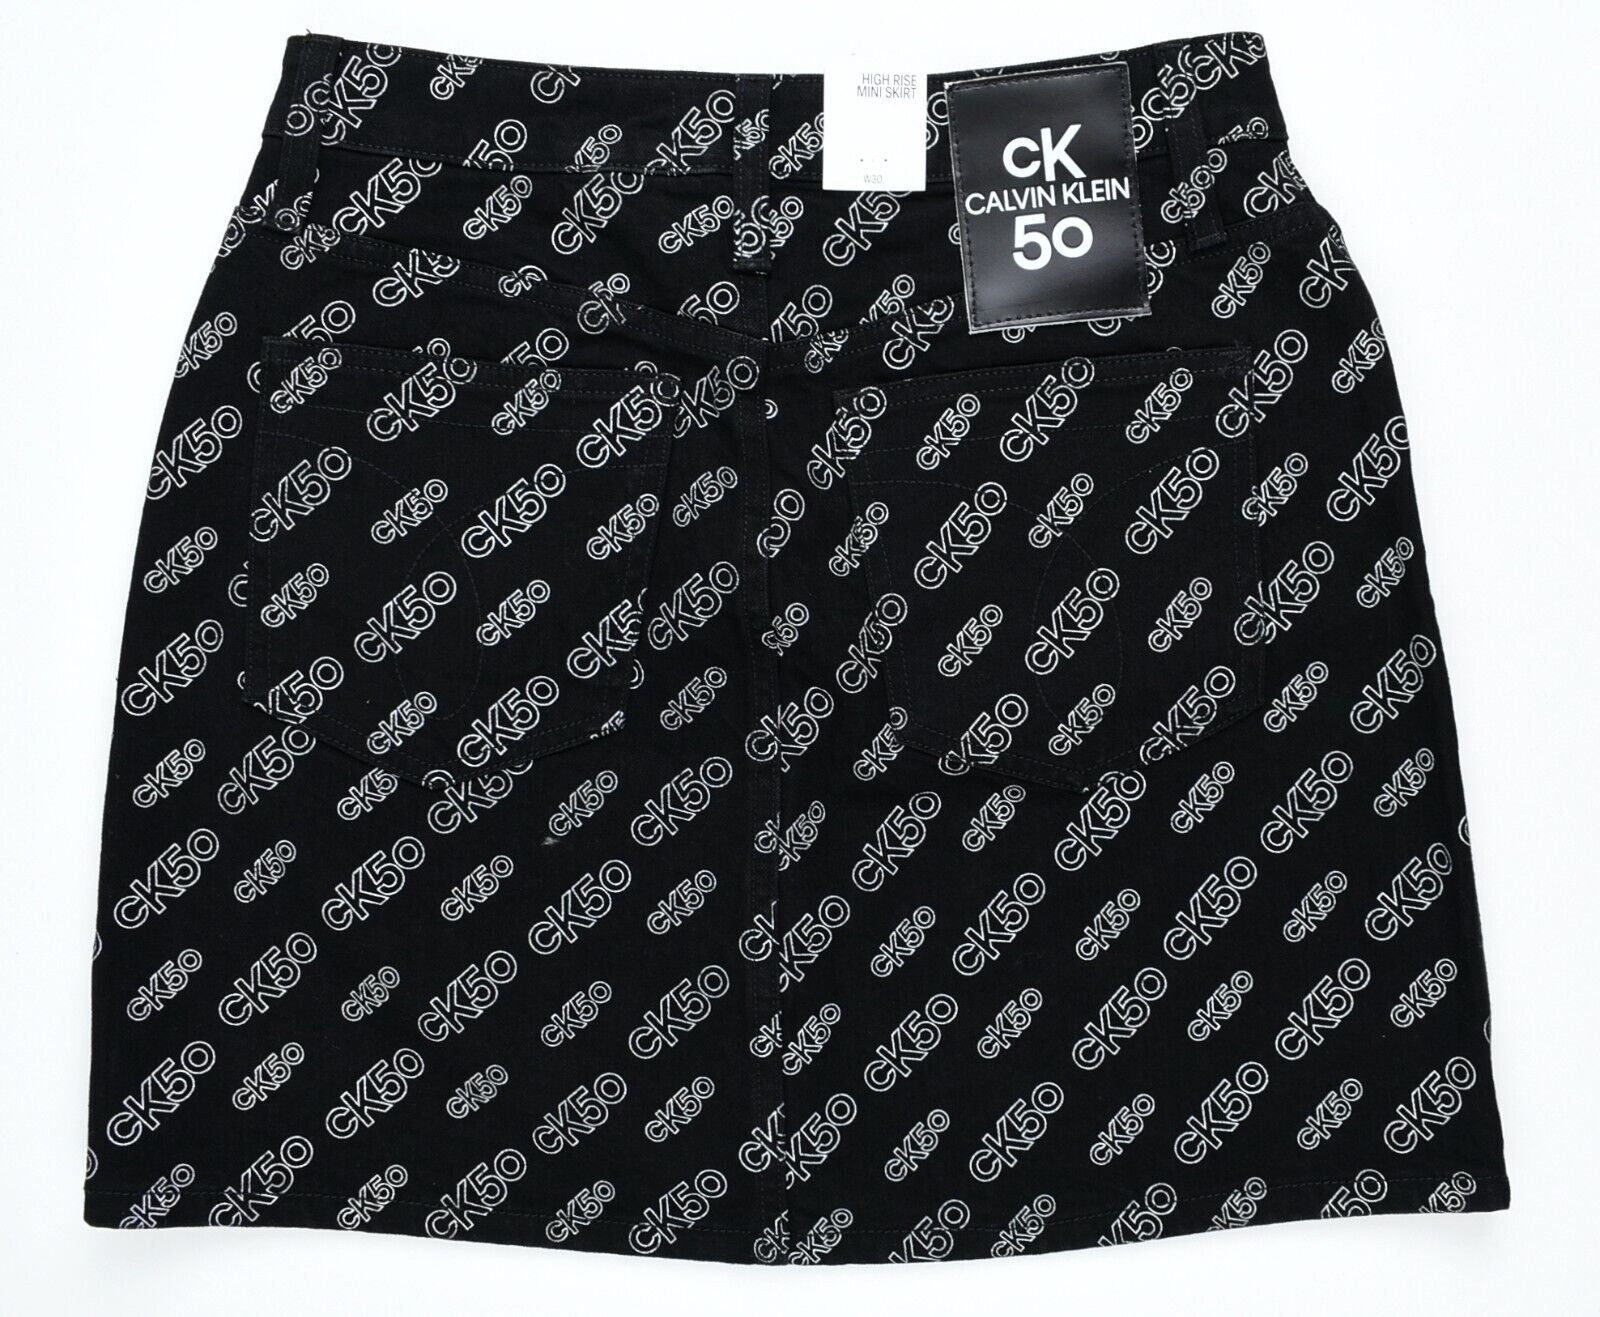 CALVIN KLEIN JEANS Women's CK50 High Rise Denim Mini Skirt, Black, size W30